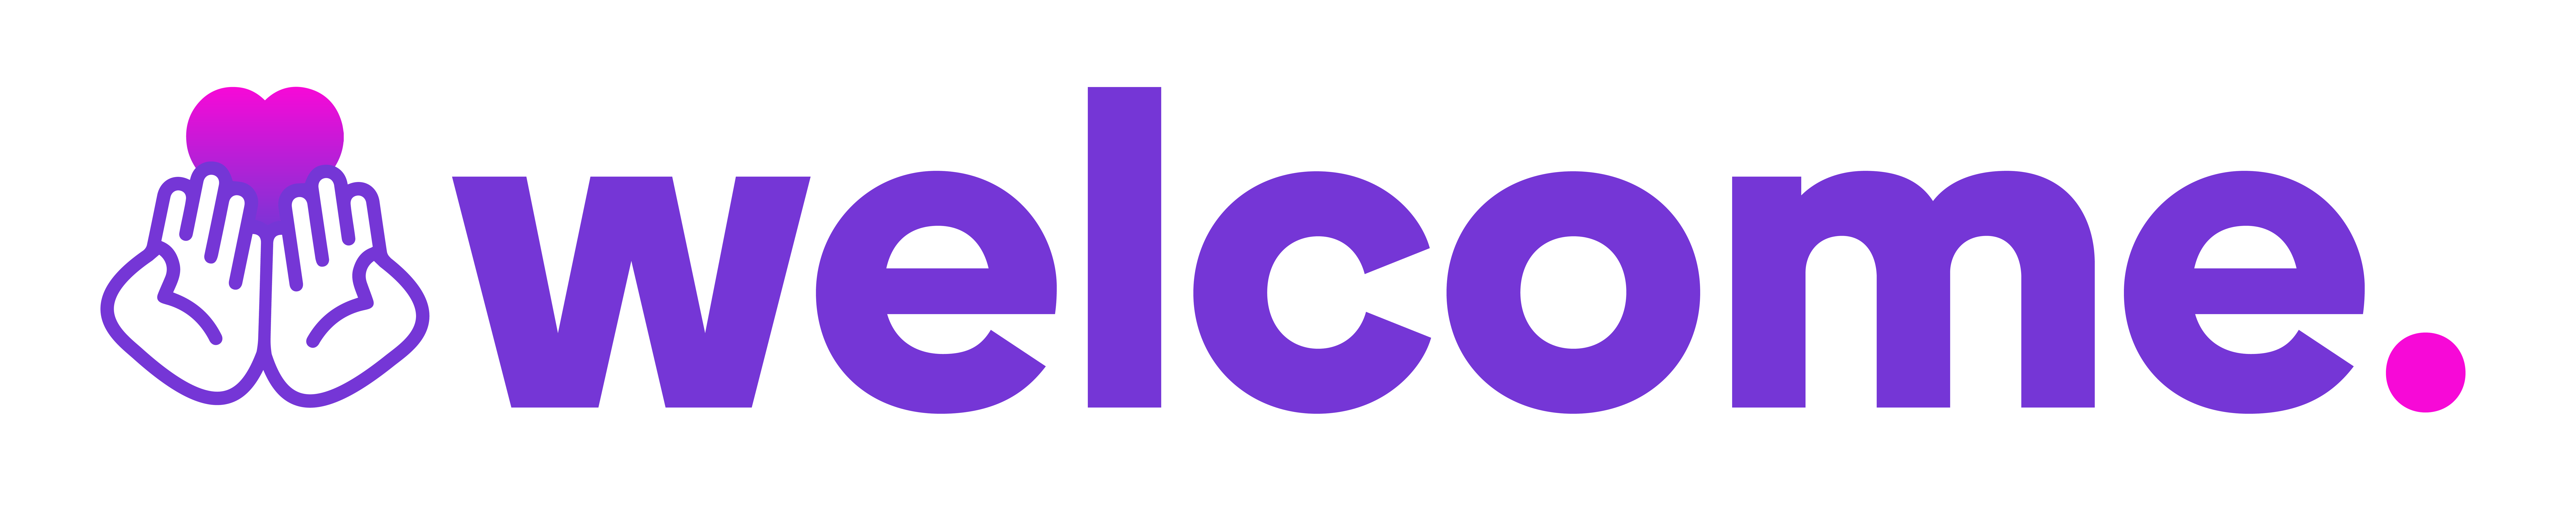 welcome logo-02